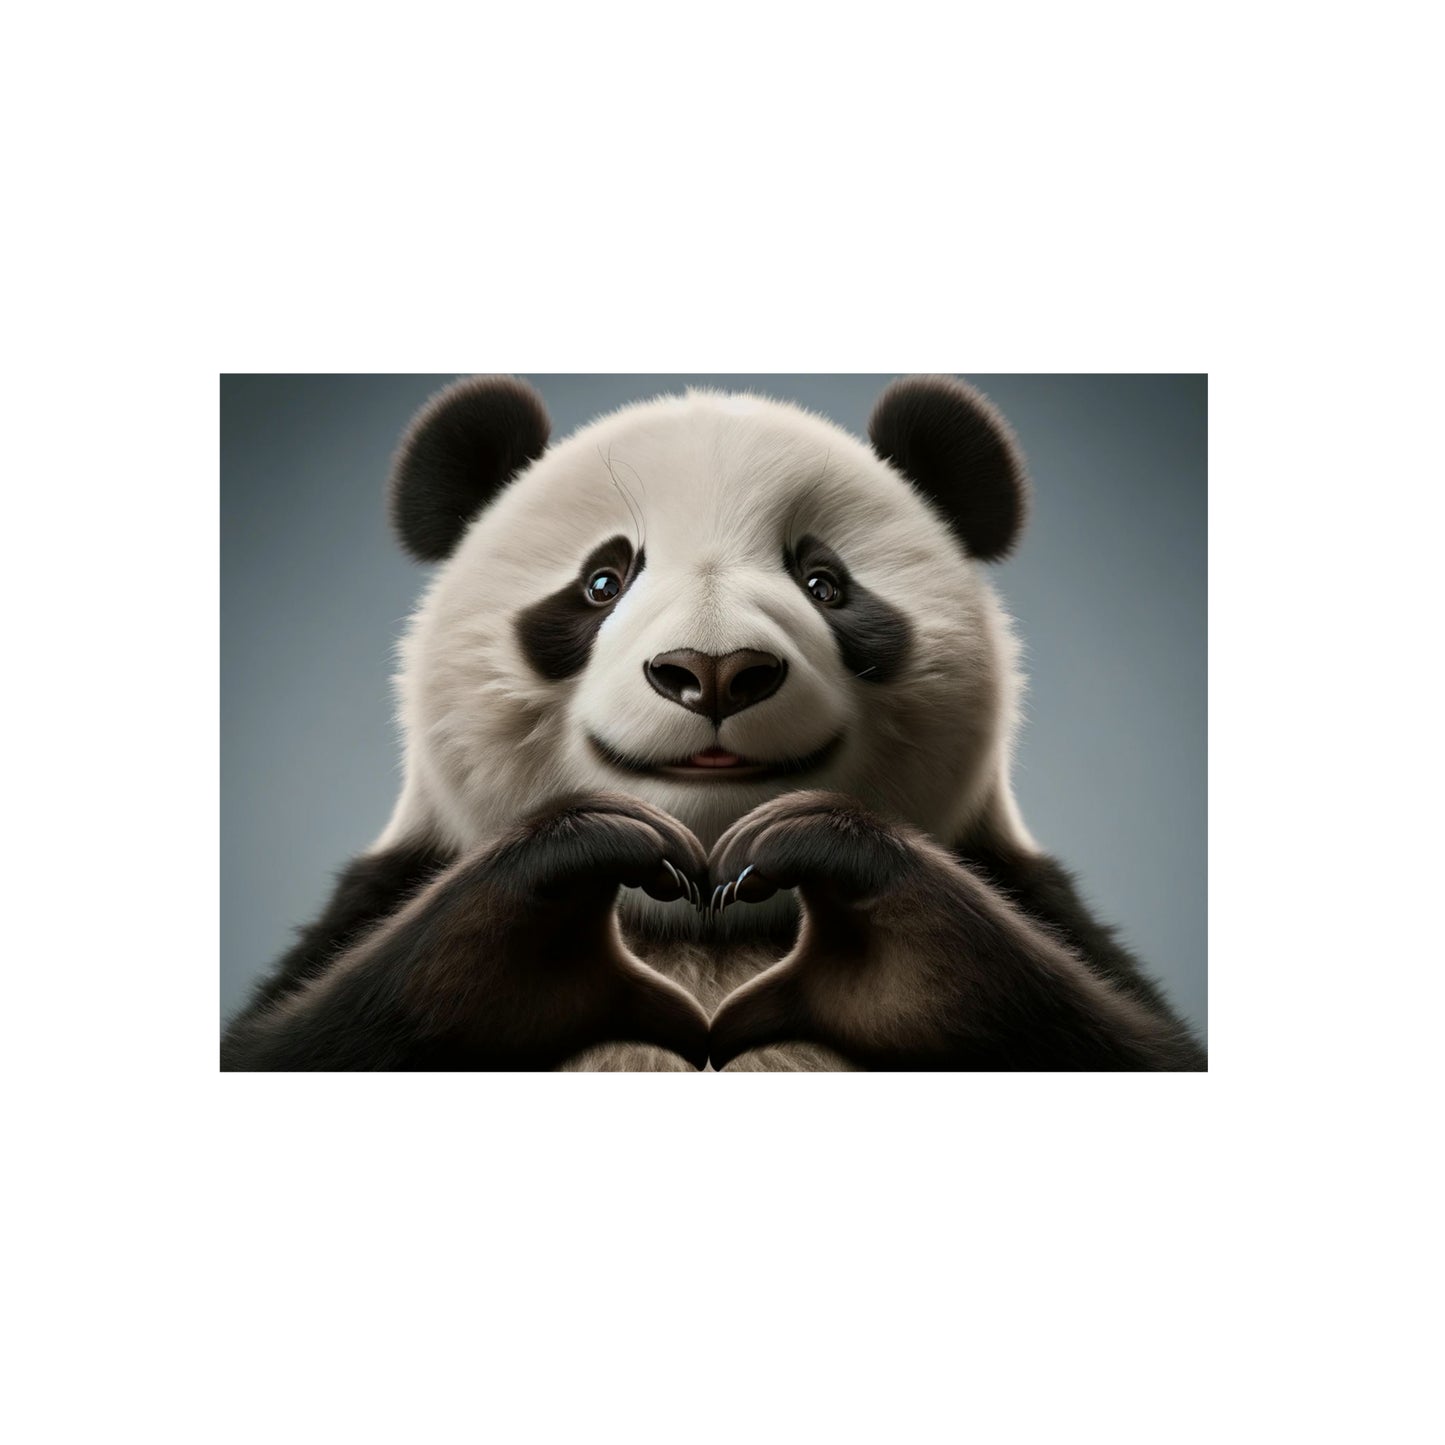 Panda's Gentle Love - Aluminum Composite Panel